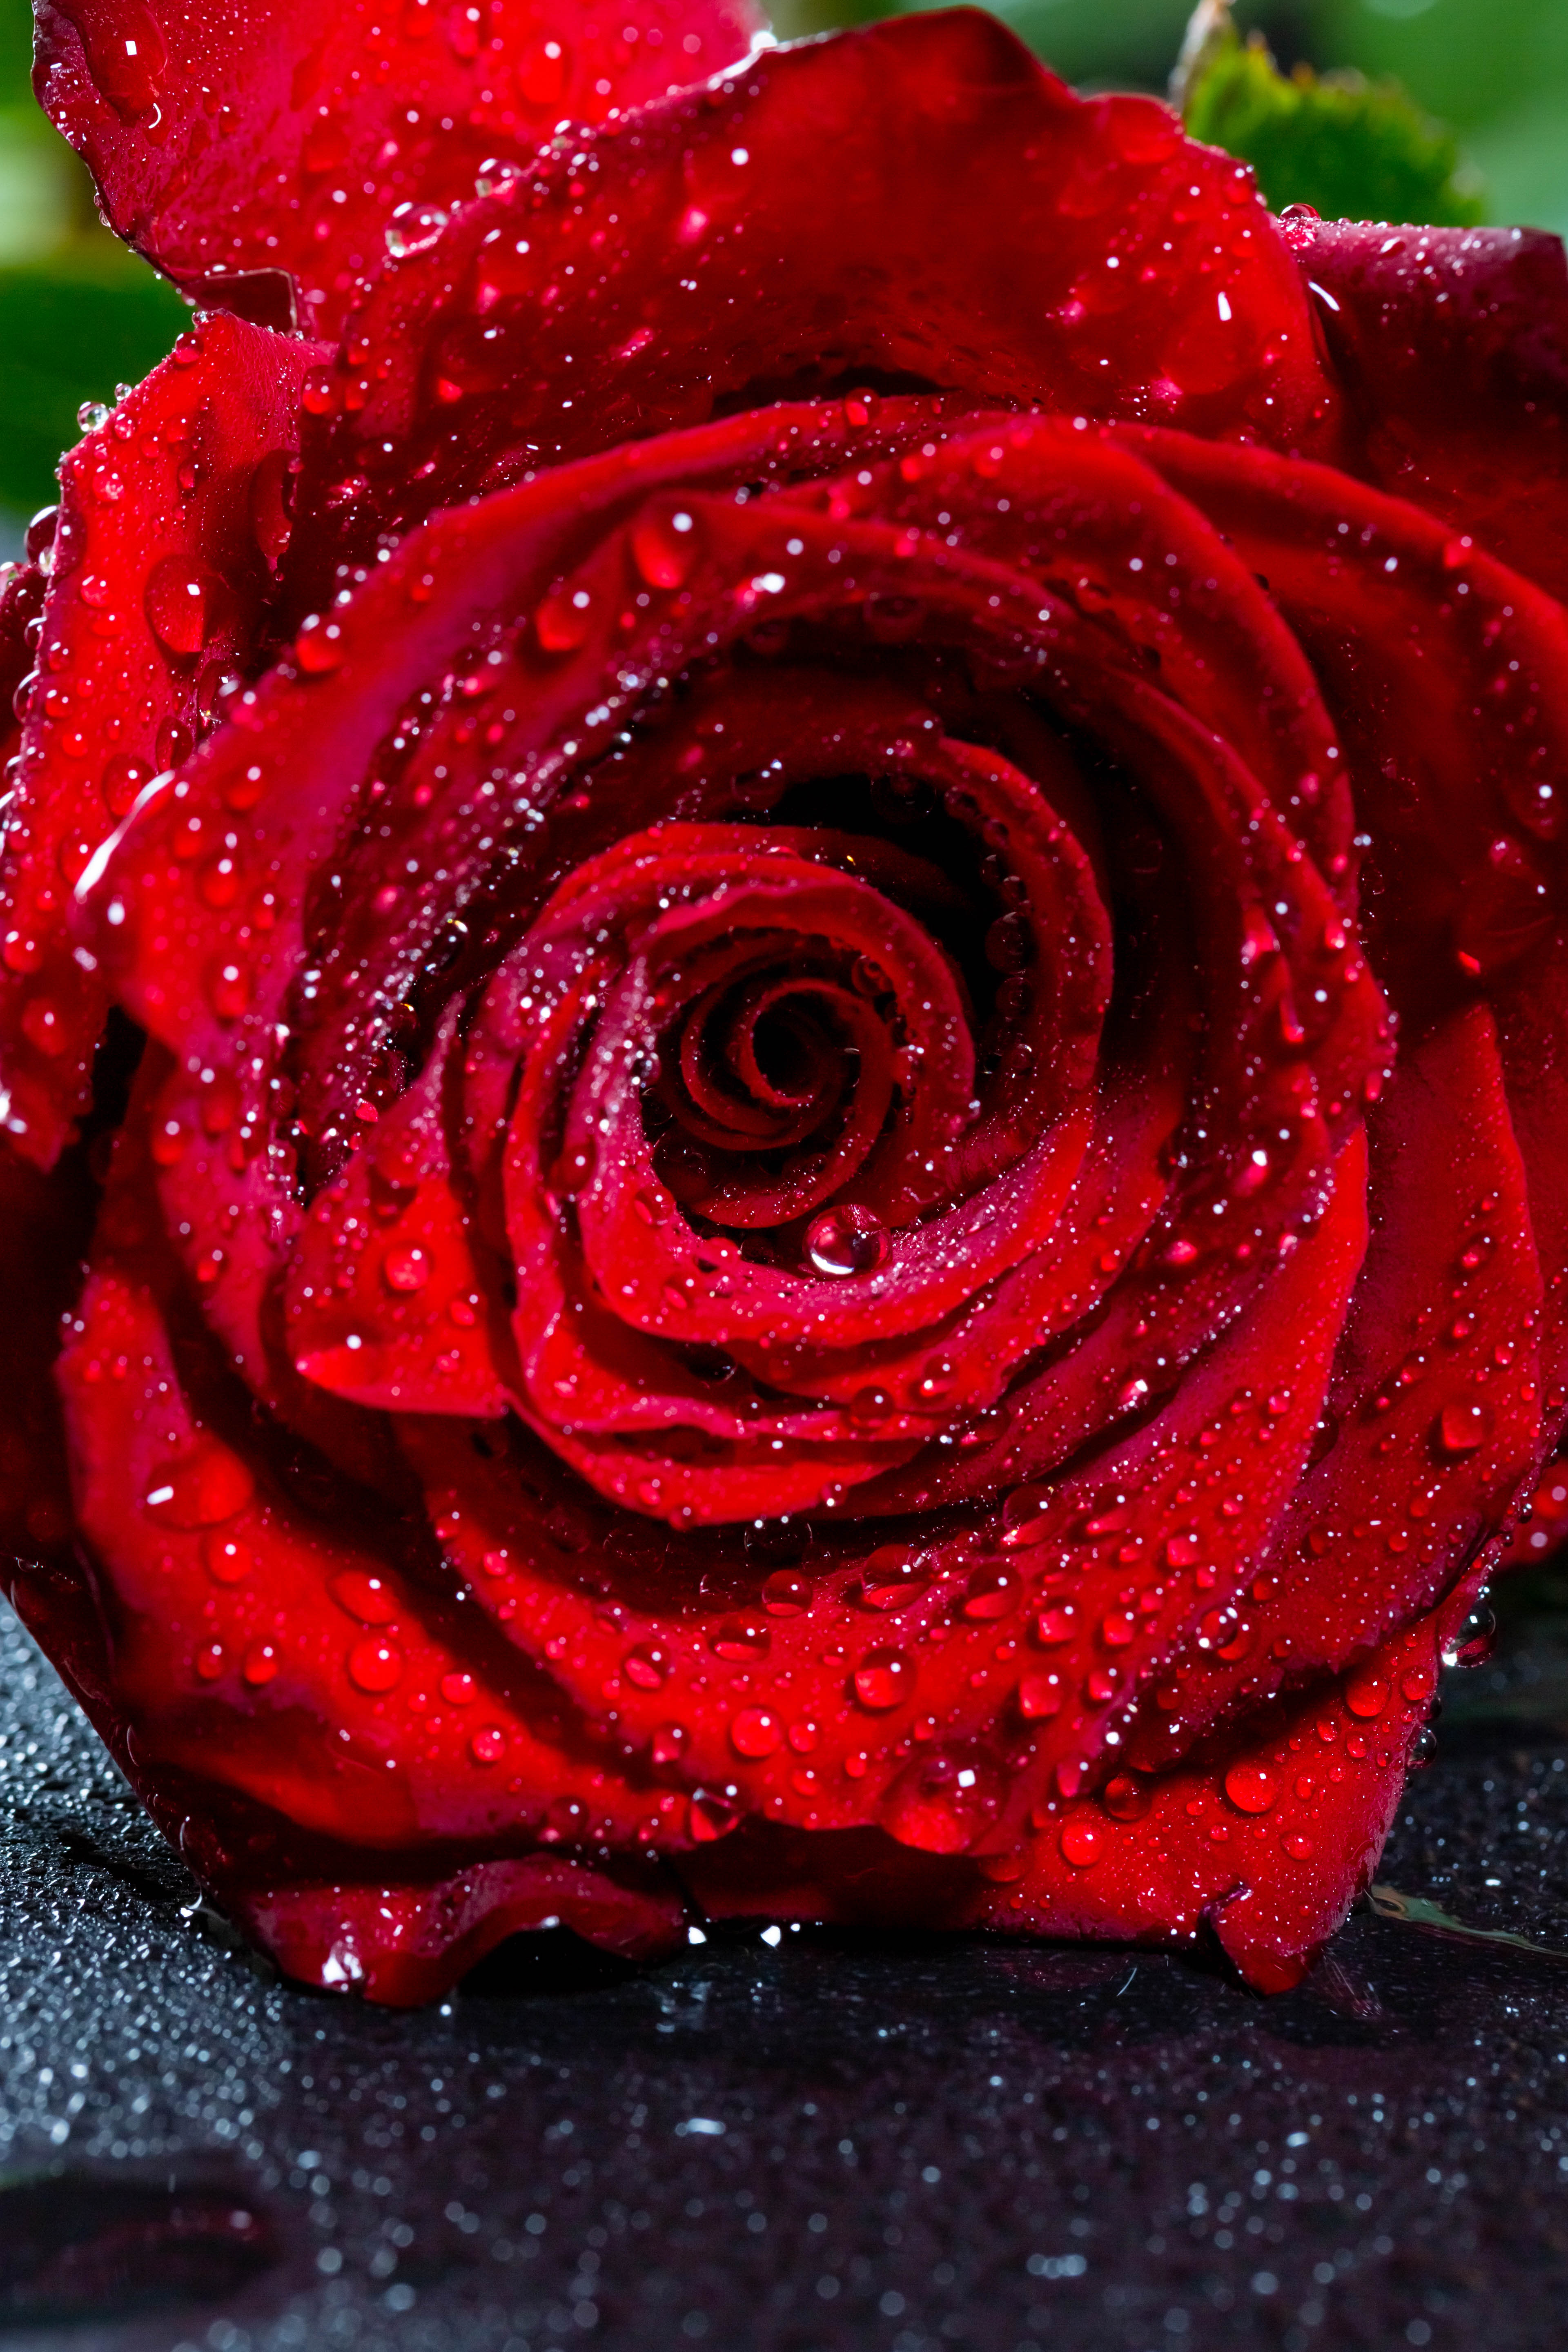 Wallpaper Rose Bud Drops Red Flower Wet Red Rose Wallpaper Hd 3840x5760 Wallpaper Teahub Io